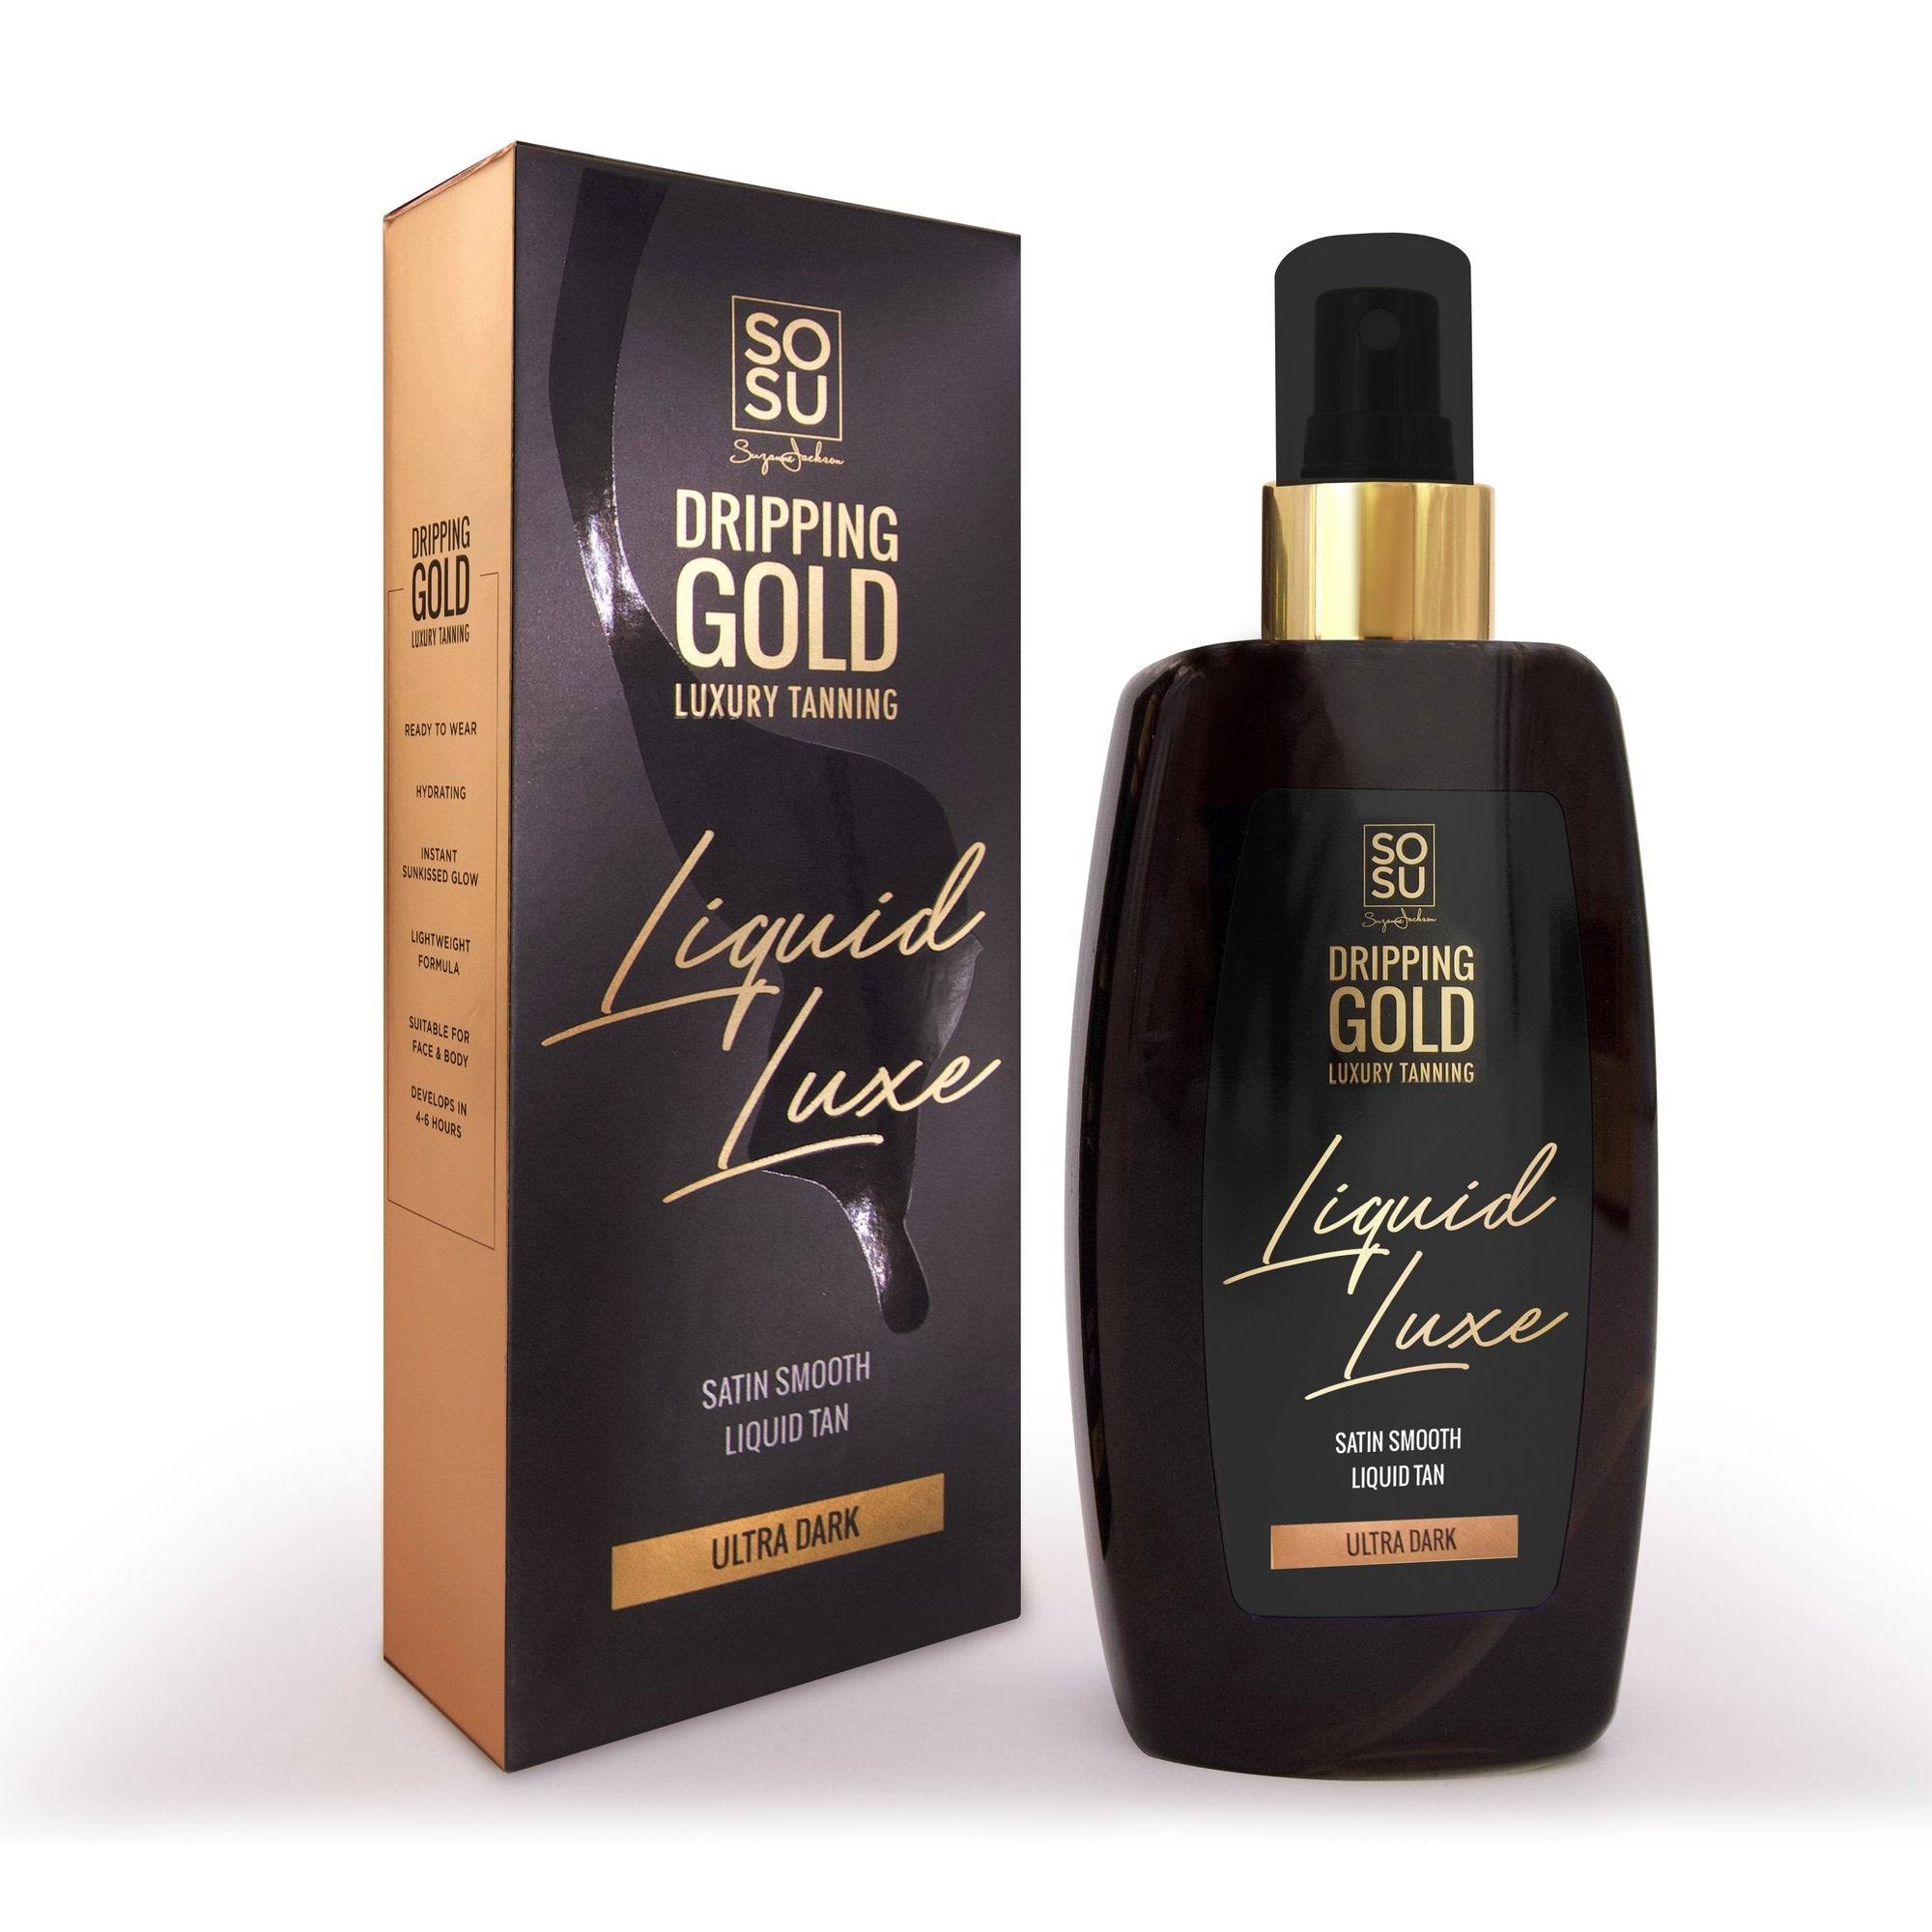 SoSu - Dripping Liquid Luxe Ultra Dark - Gold